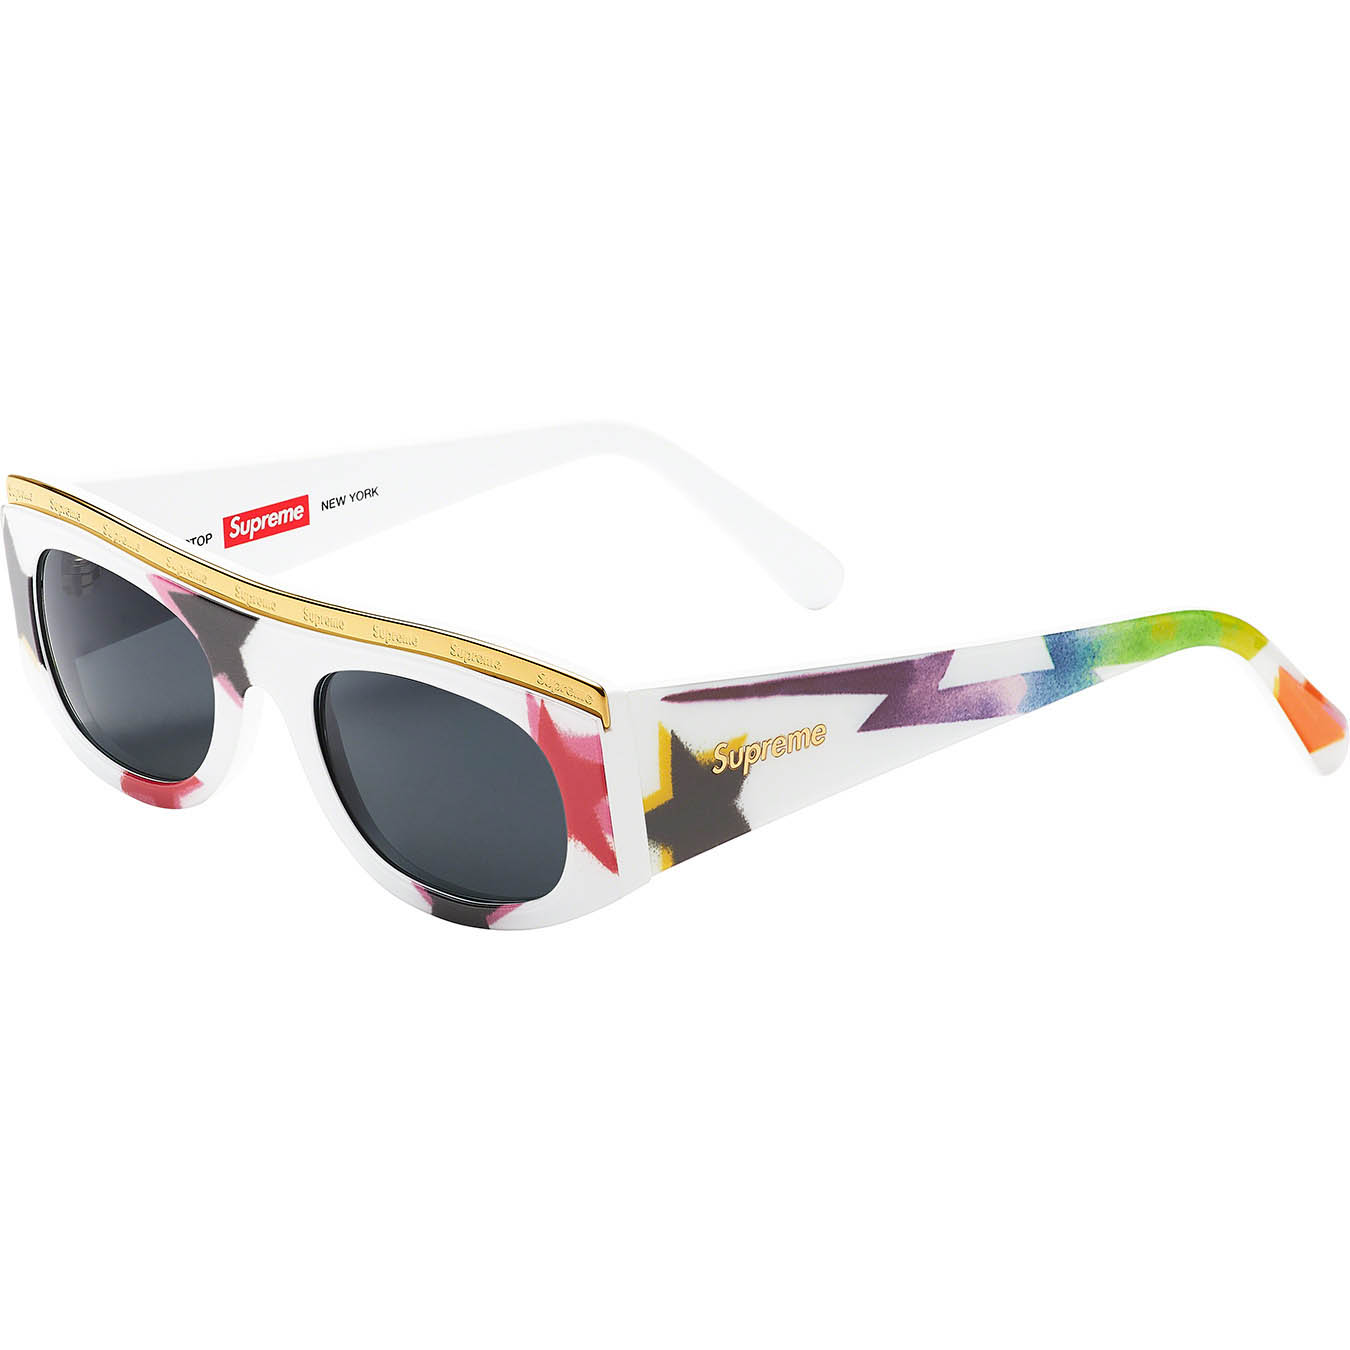 Goldtop Sunglasses | Supreme 21ss